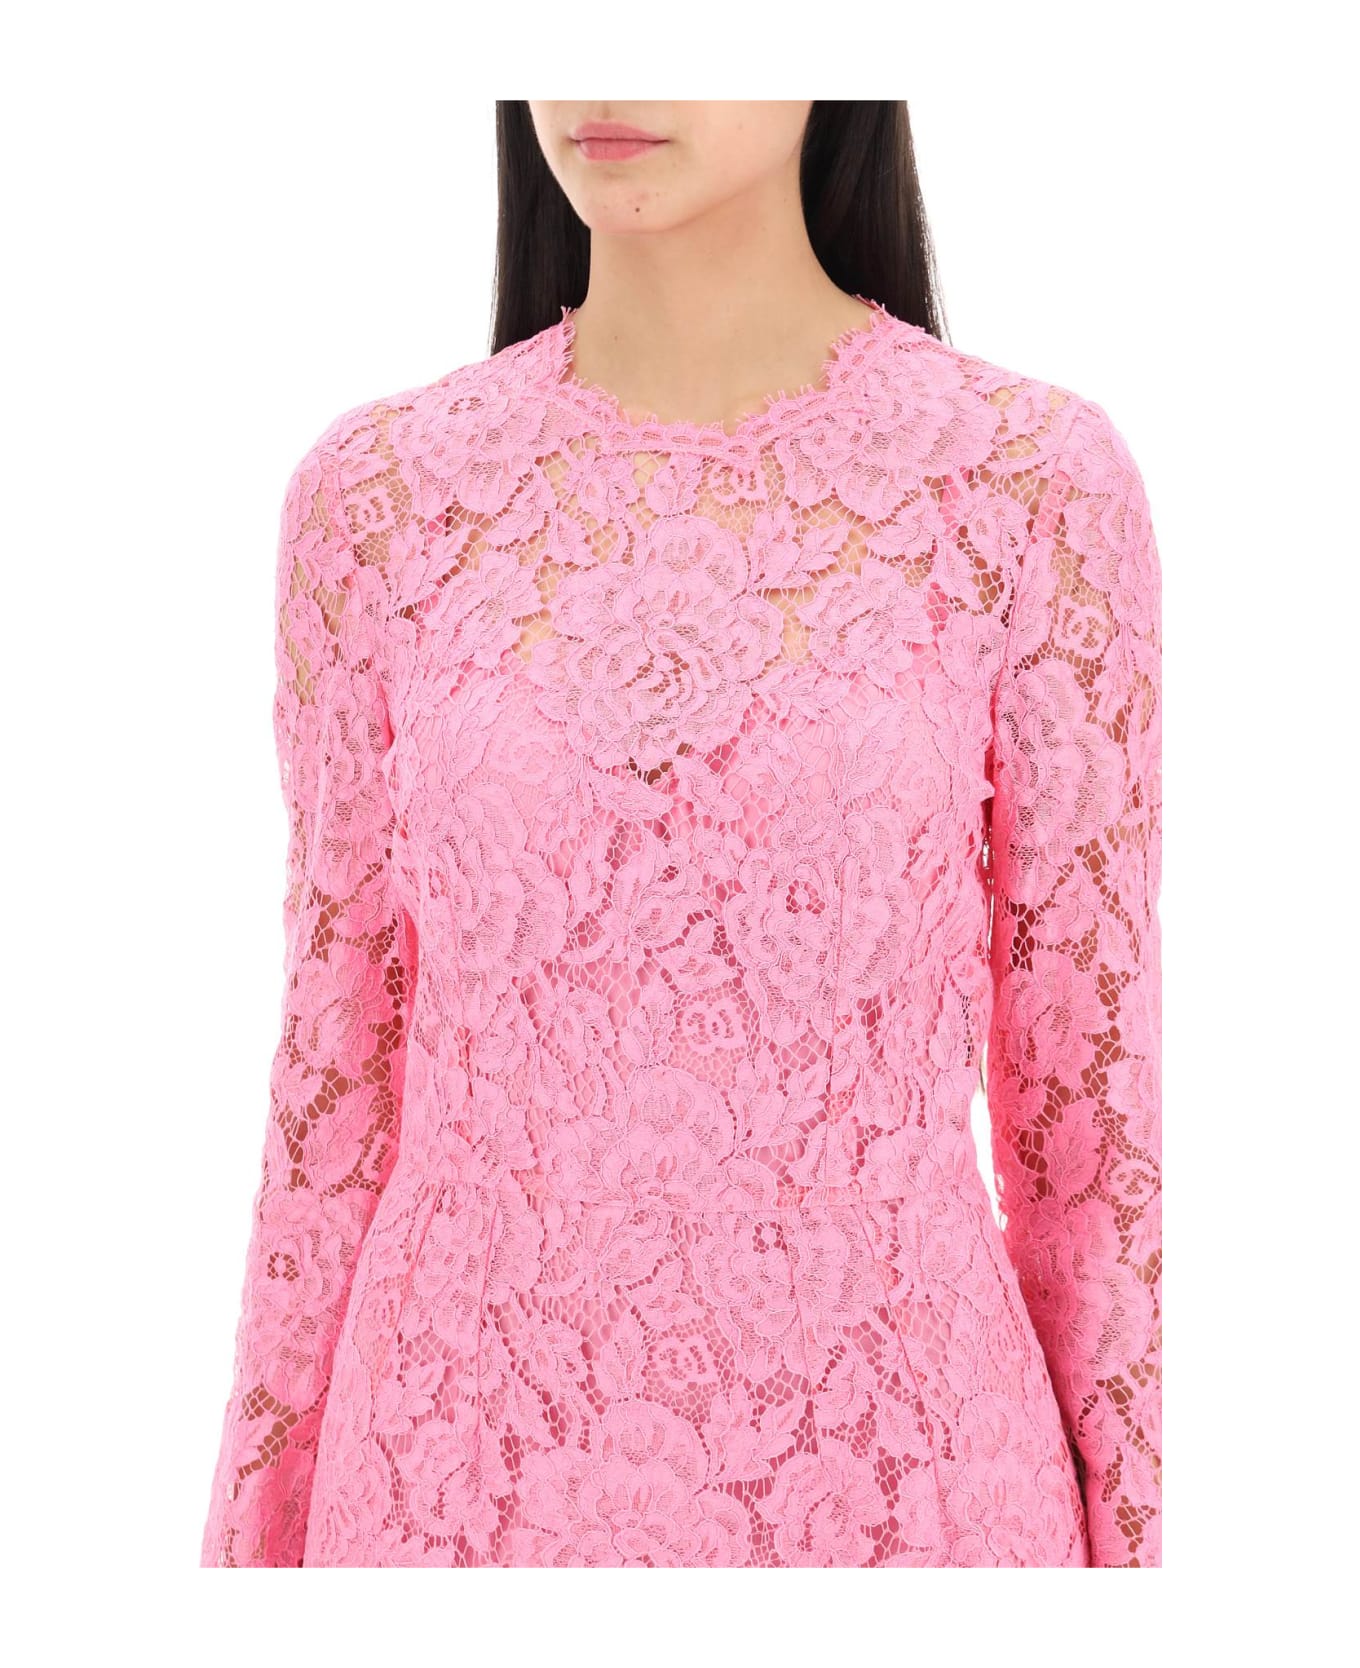 Dolce & Gabbana Midi Dress In Floral Cordonnet Lace - ROSA 2 (Pink)